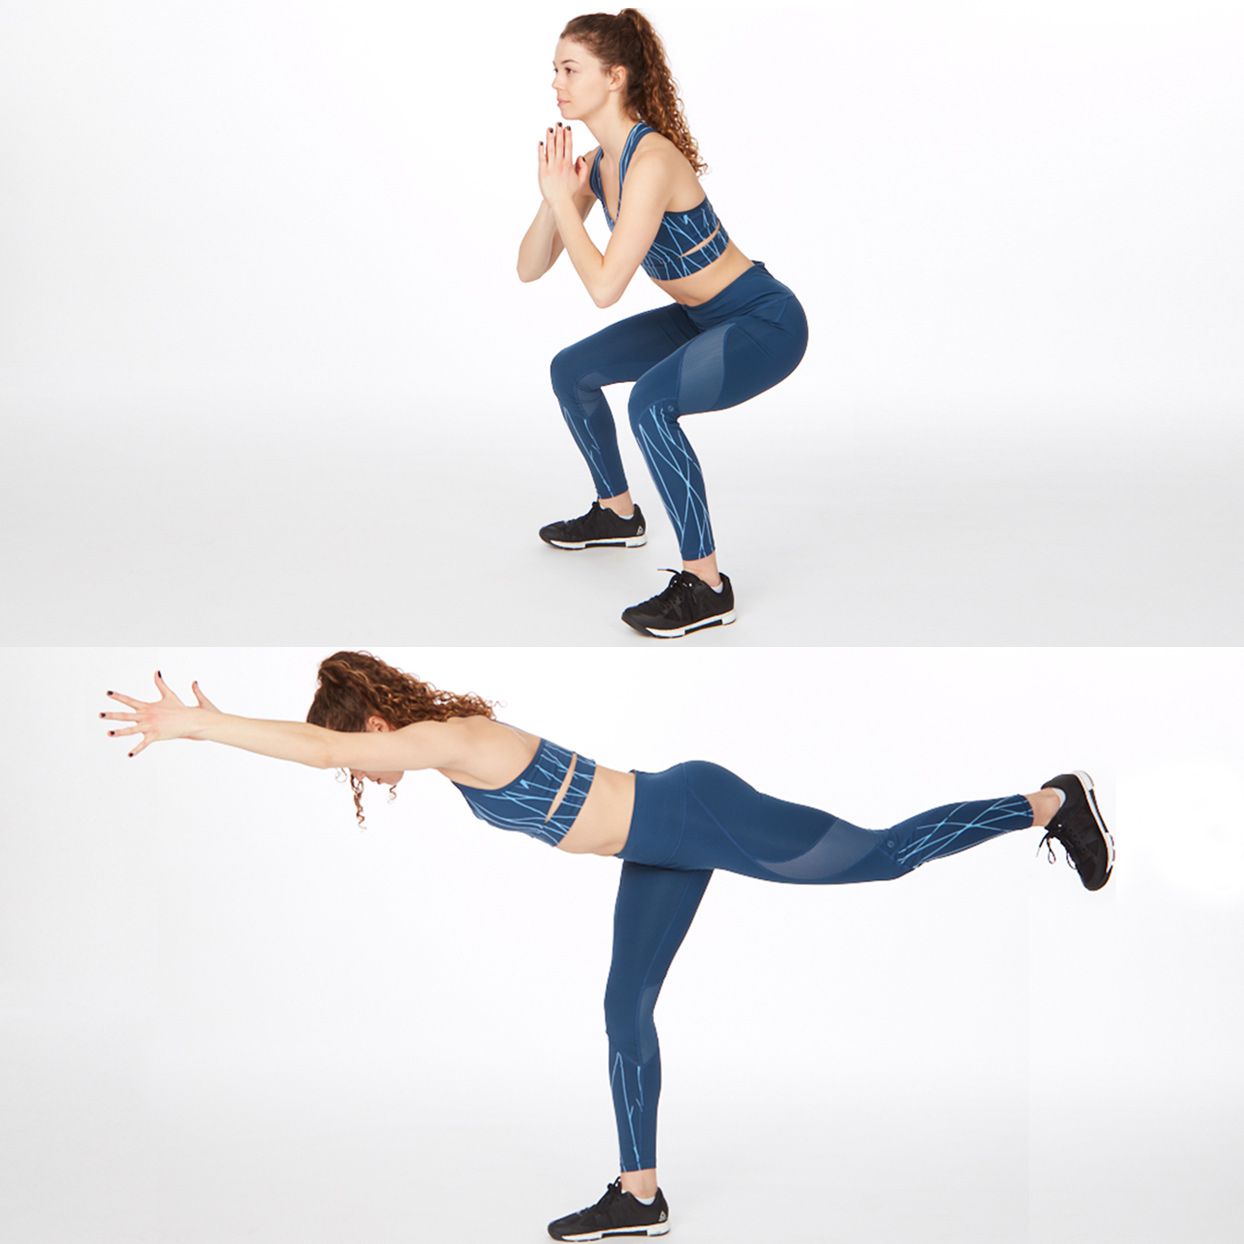 squat to kickback butt lifting exercise